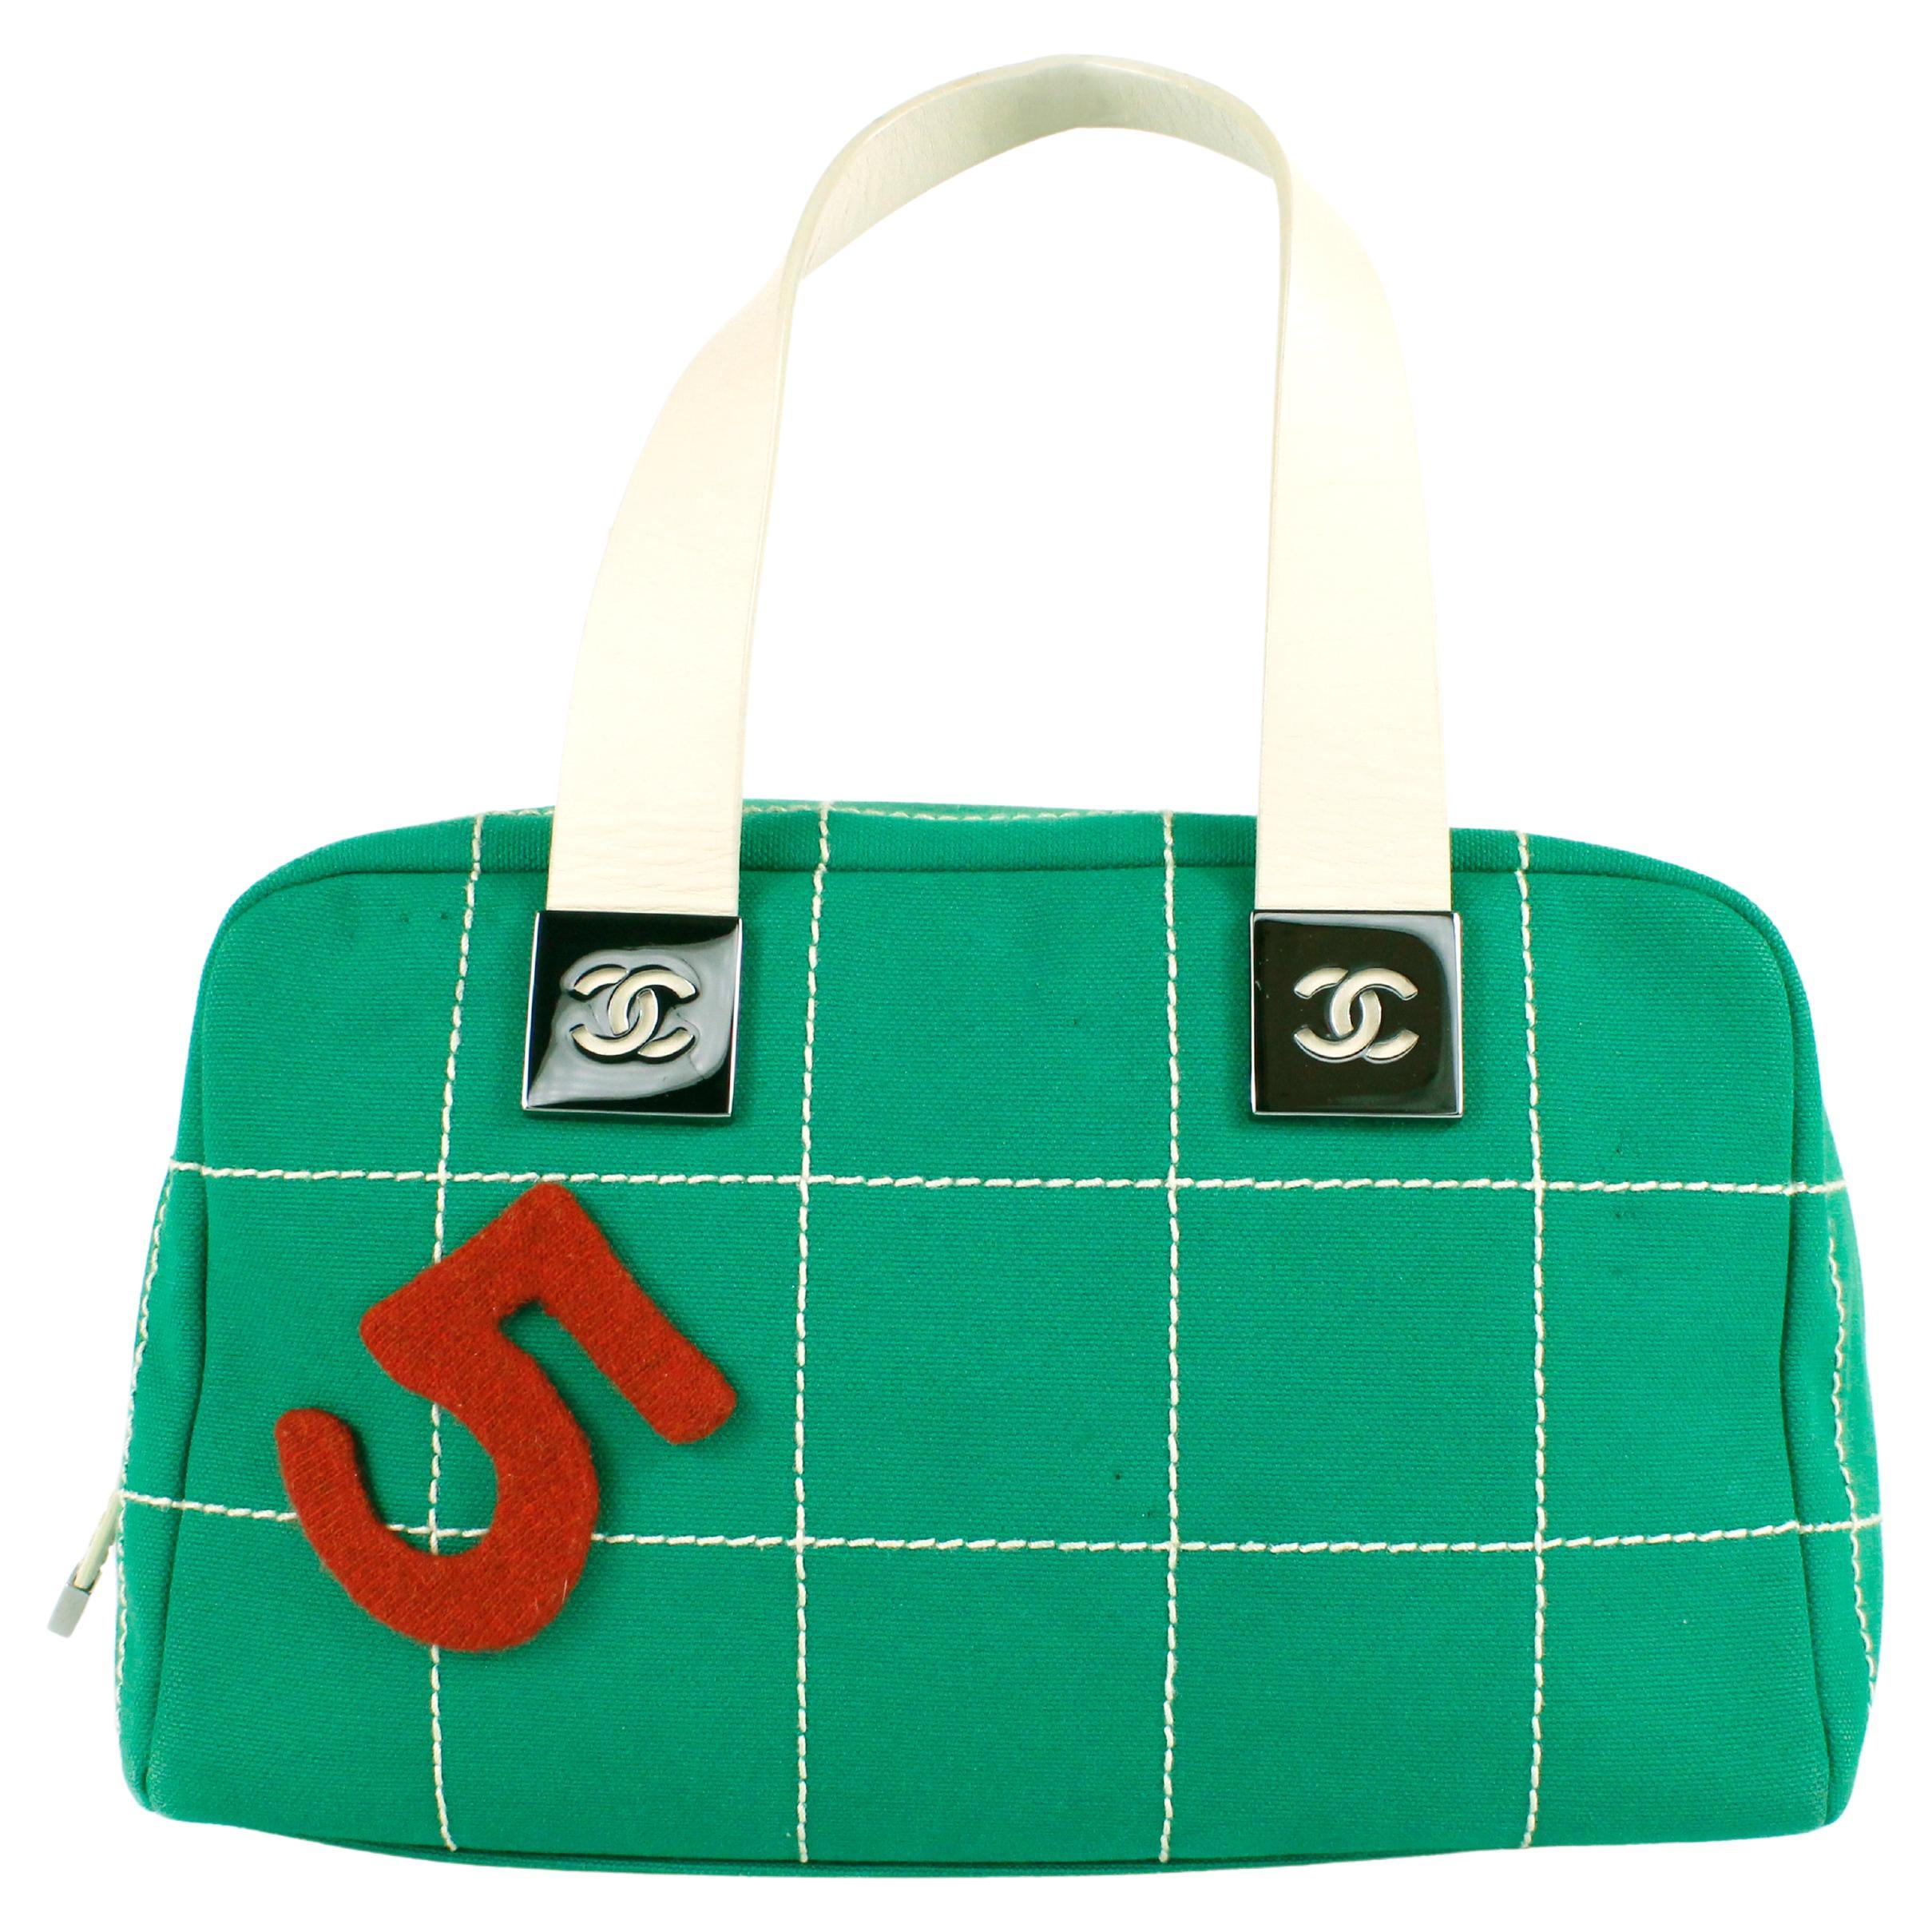 Chanel Wild Stitch Bag For Sale